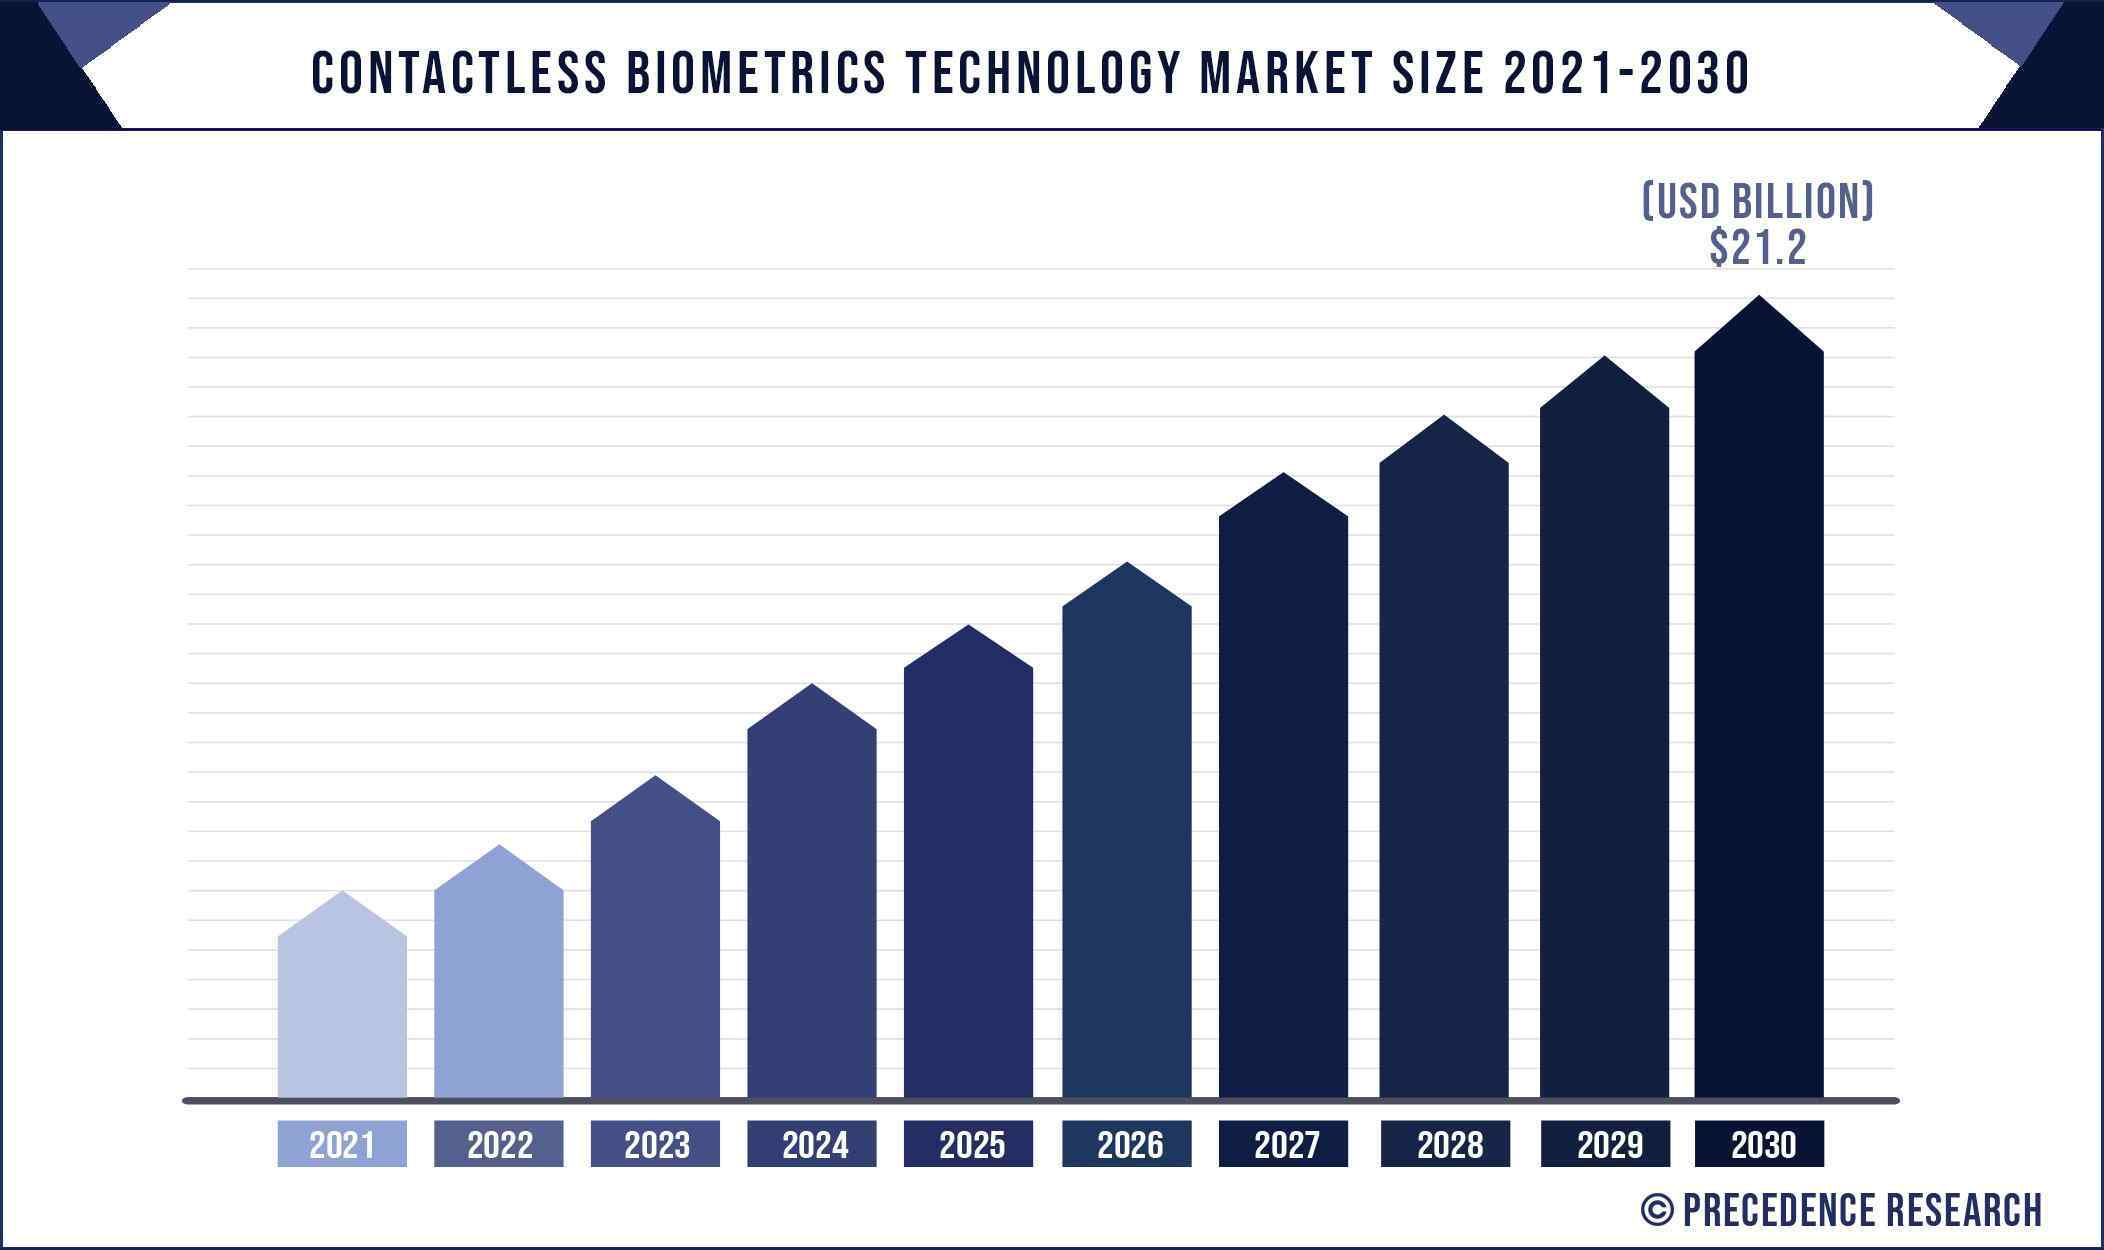 Contactless Biometrics Technology Market Size 2021 to 2030